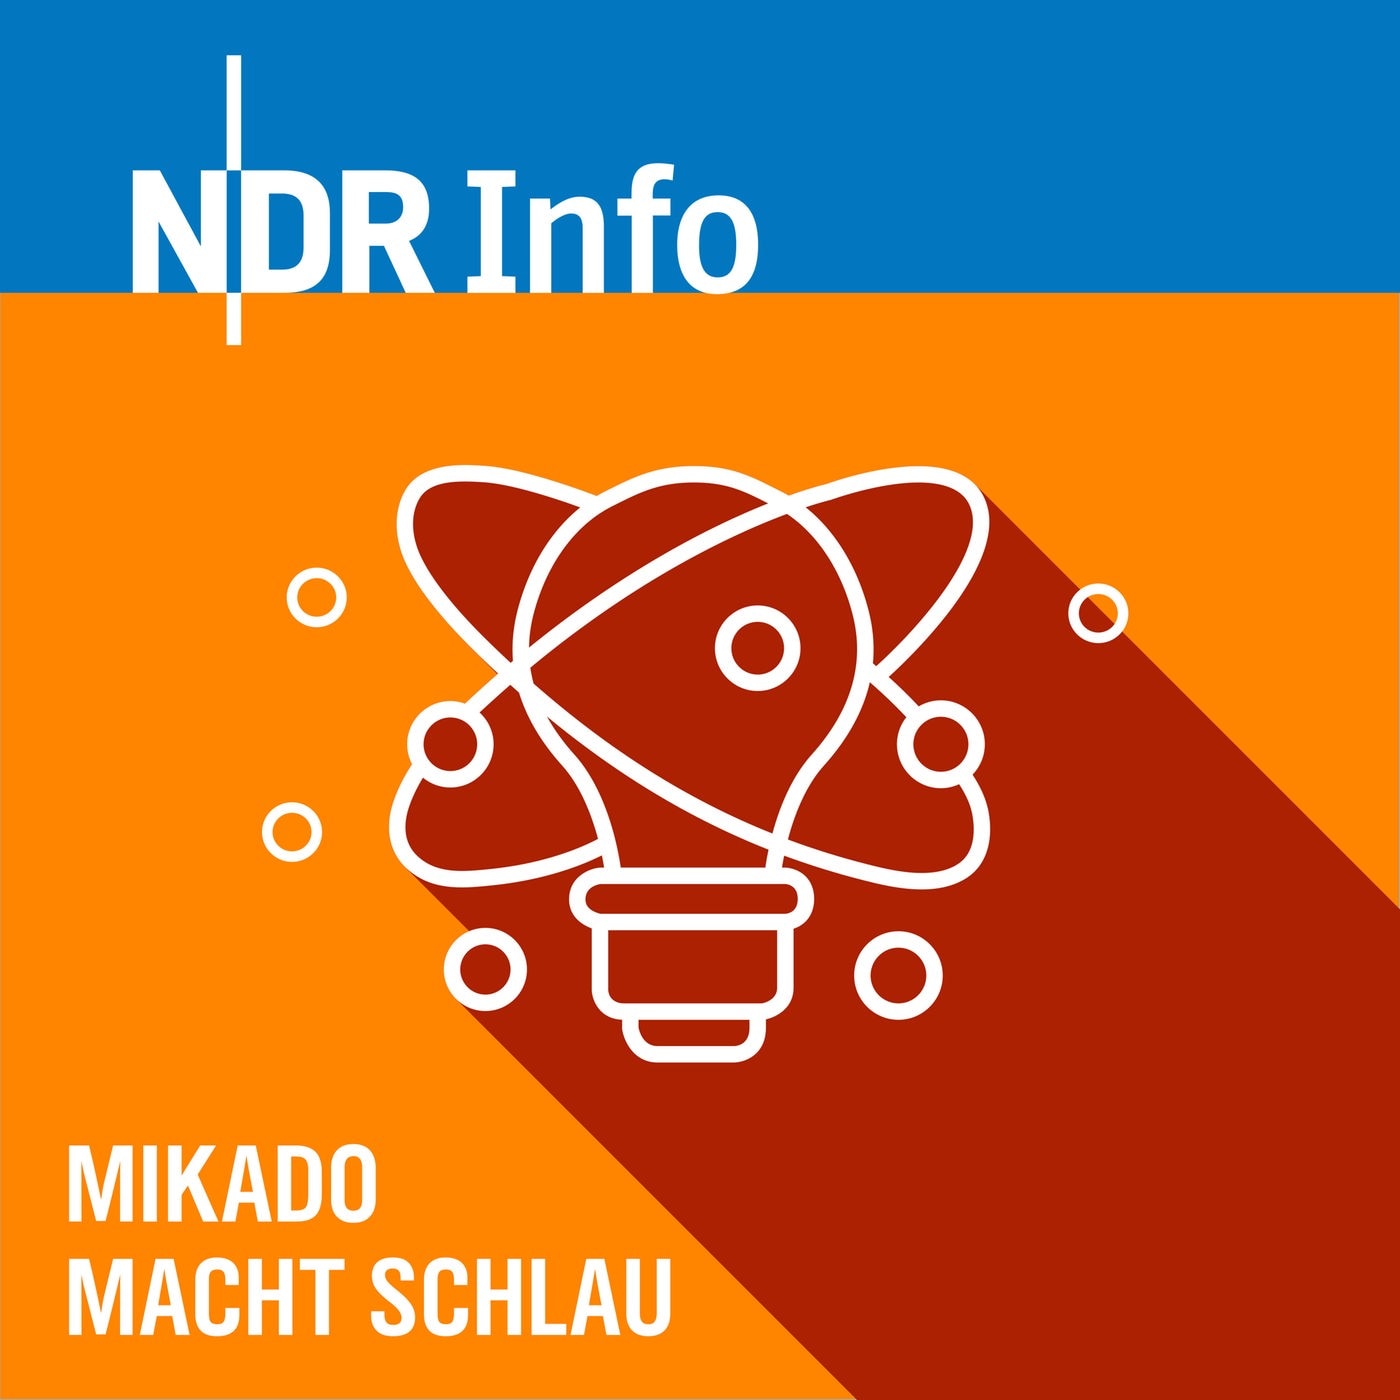 Mikado macht schlau - NDR Info Kinderradio